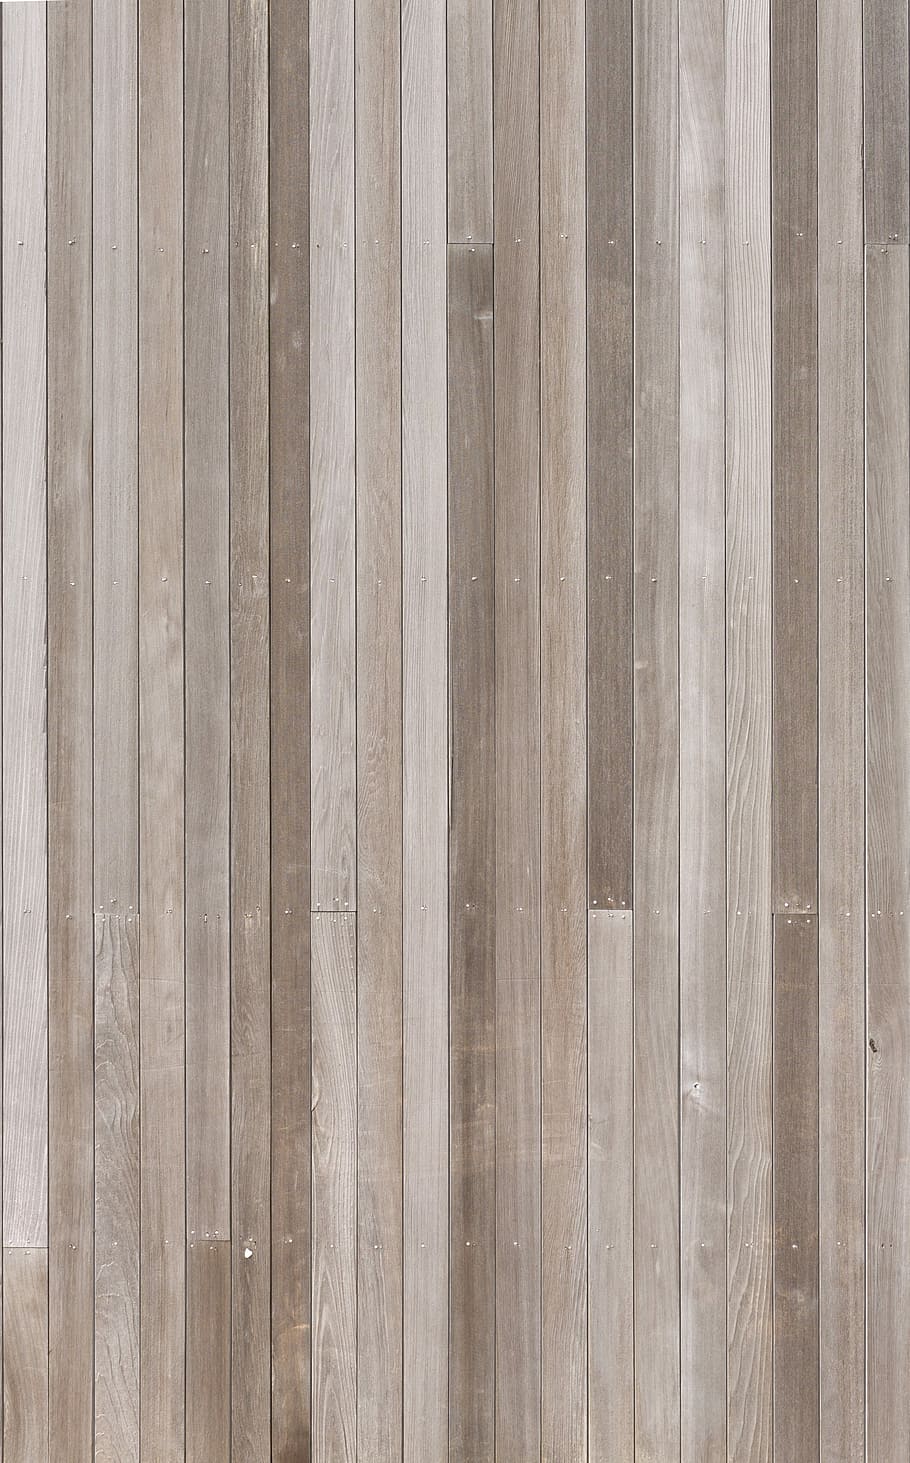 floor, wood, siding, backgrounds, textured, pattern, full frame, wood - material, wood grain, flooring